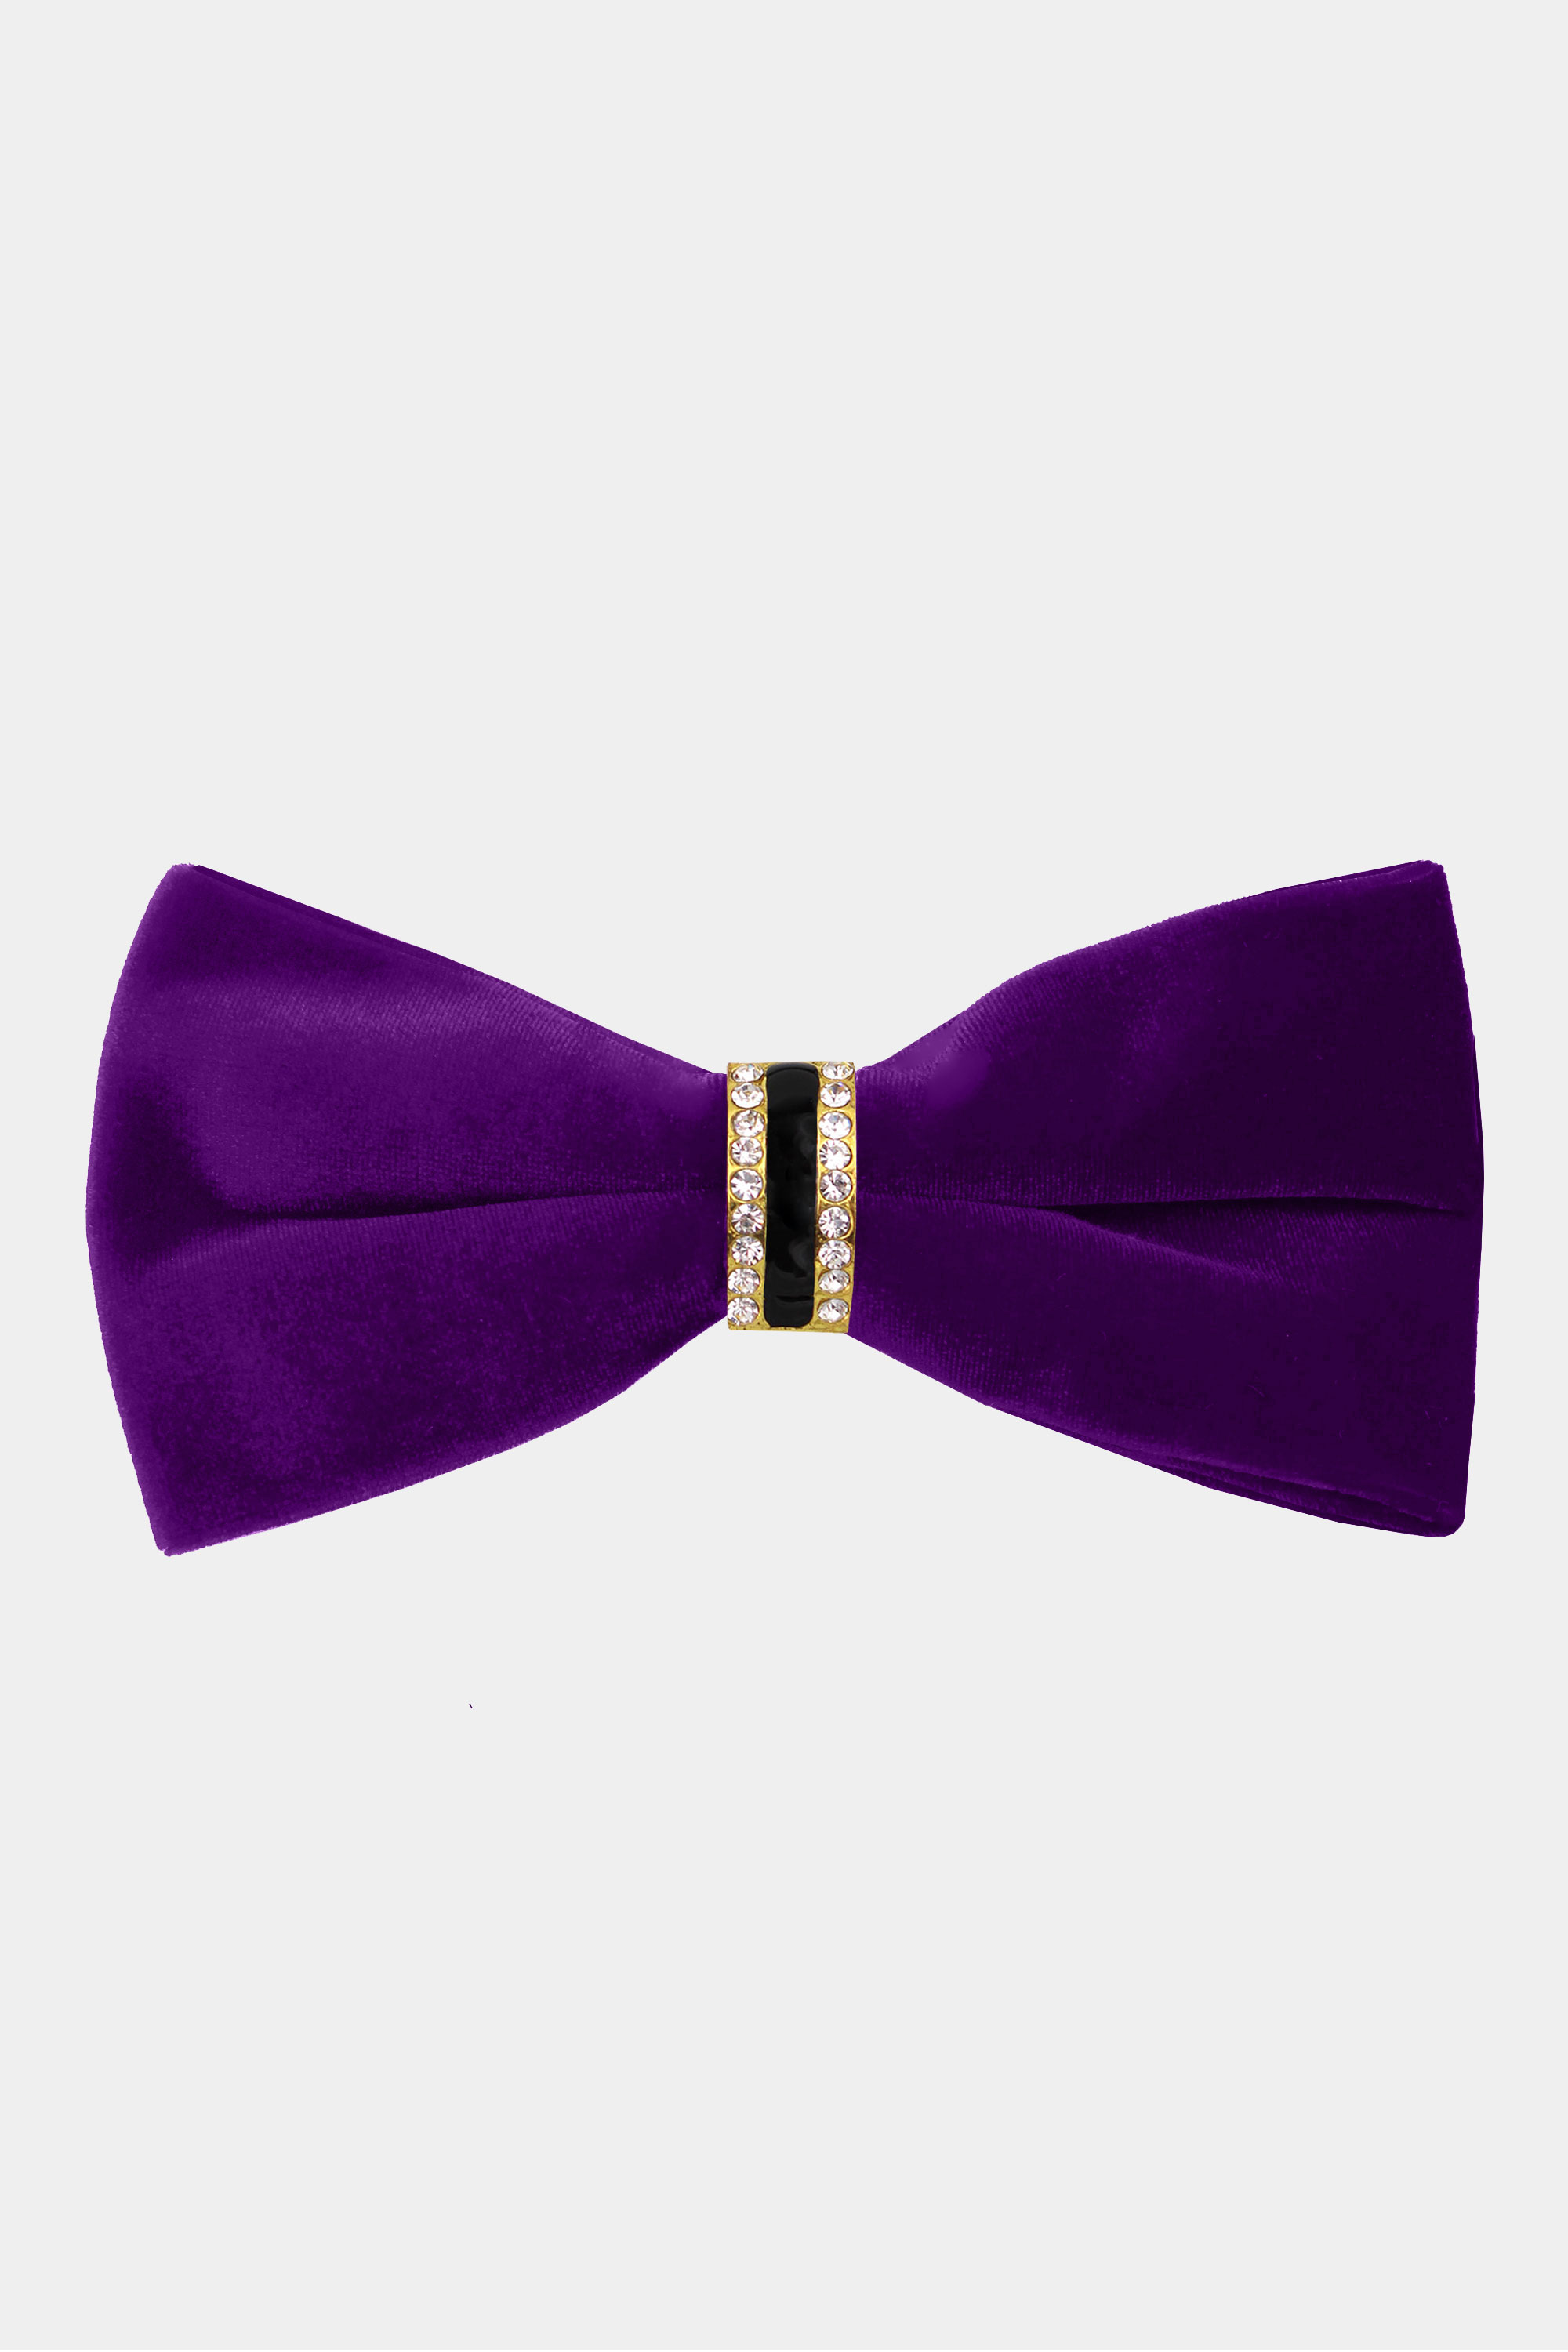 Mens-Purple-Velvet-Bow-Tie-Crystal-Luxury-Fancy-Bowtie-from-Gentlemansguru.com